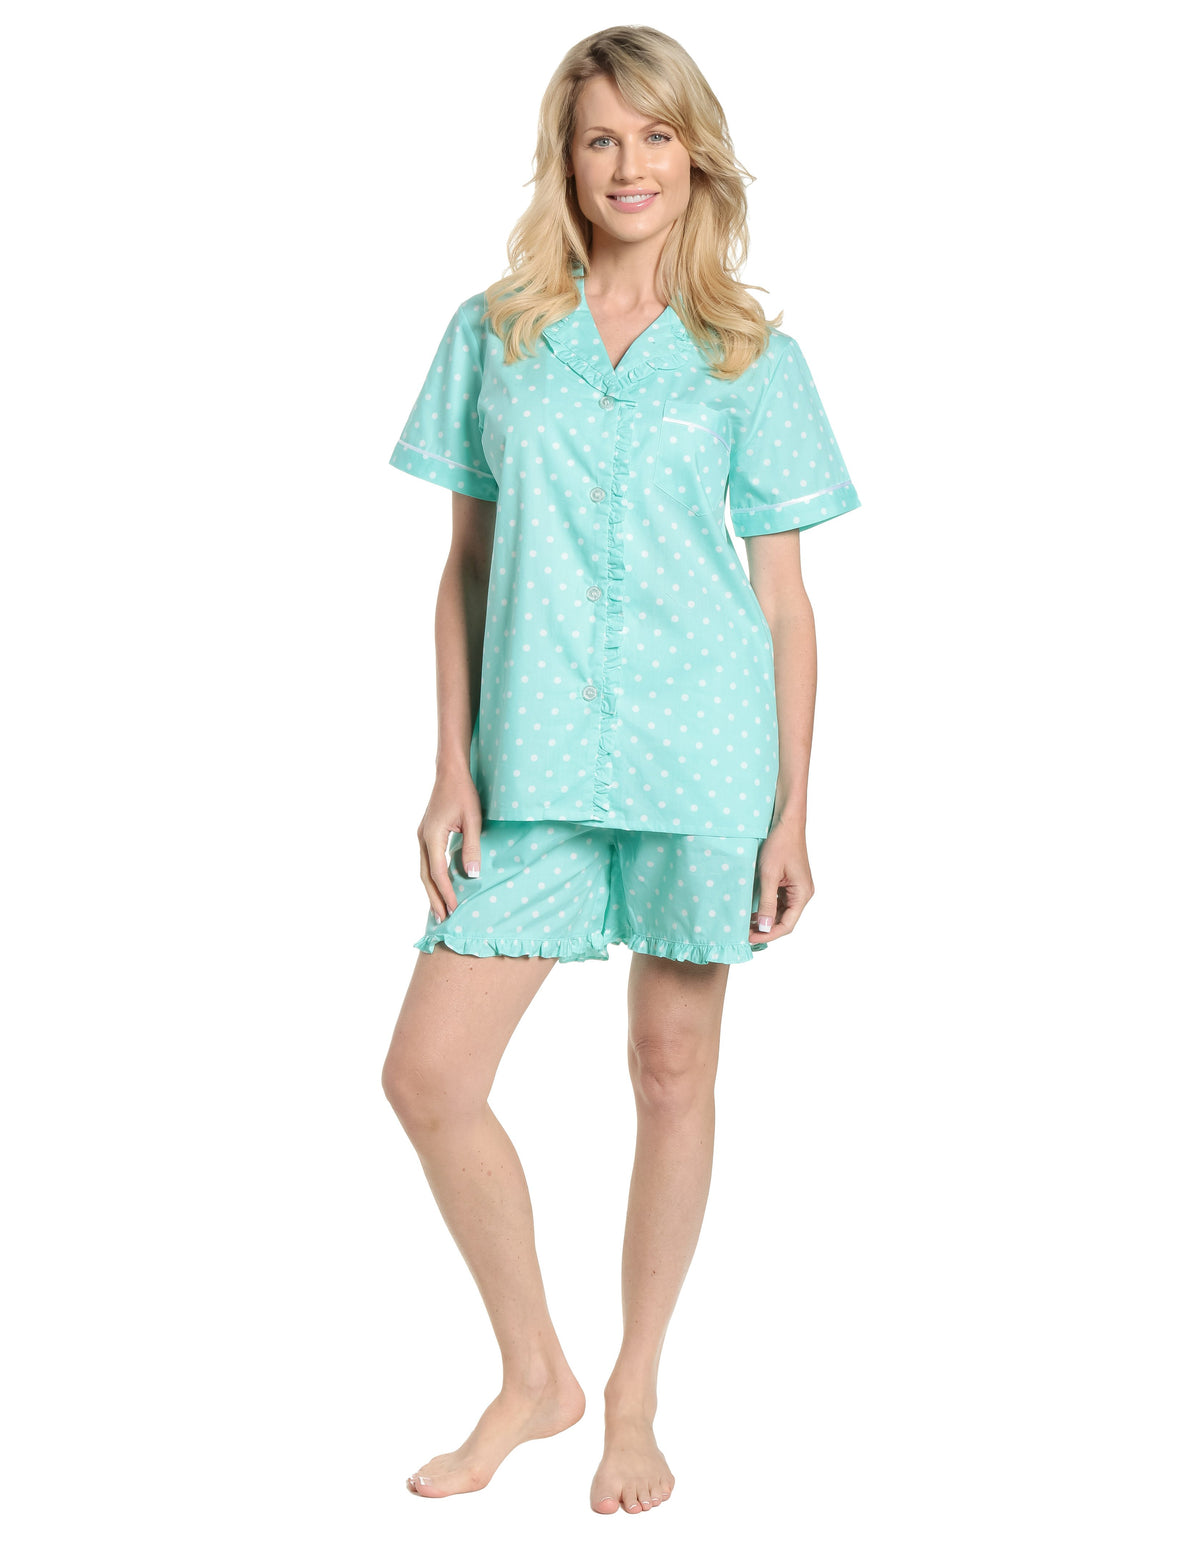 Womens Premium 100% Cotton Poplin Sort Pajama Set with Ruffles - Dots Diva Aqua-White